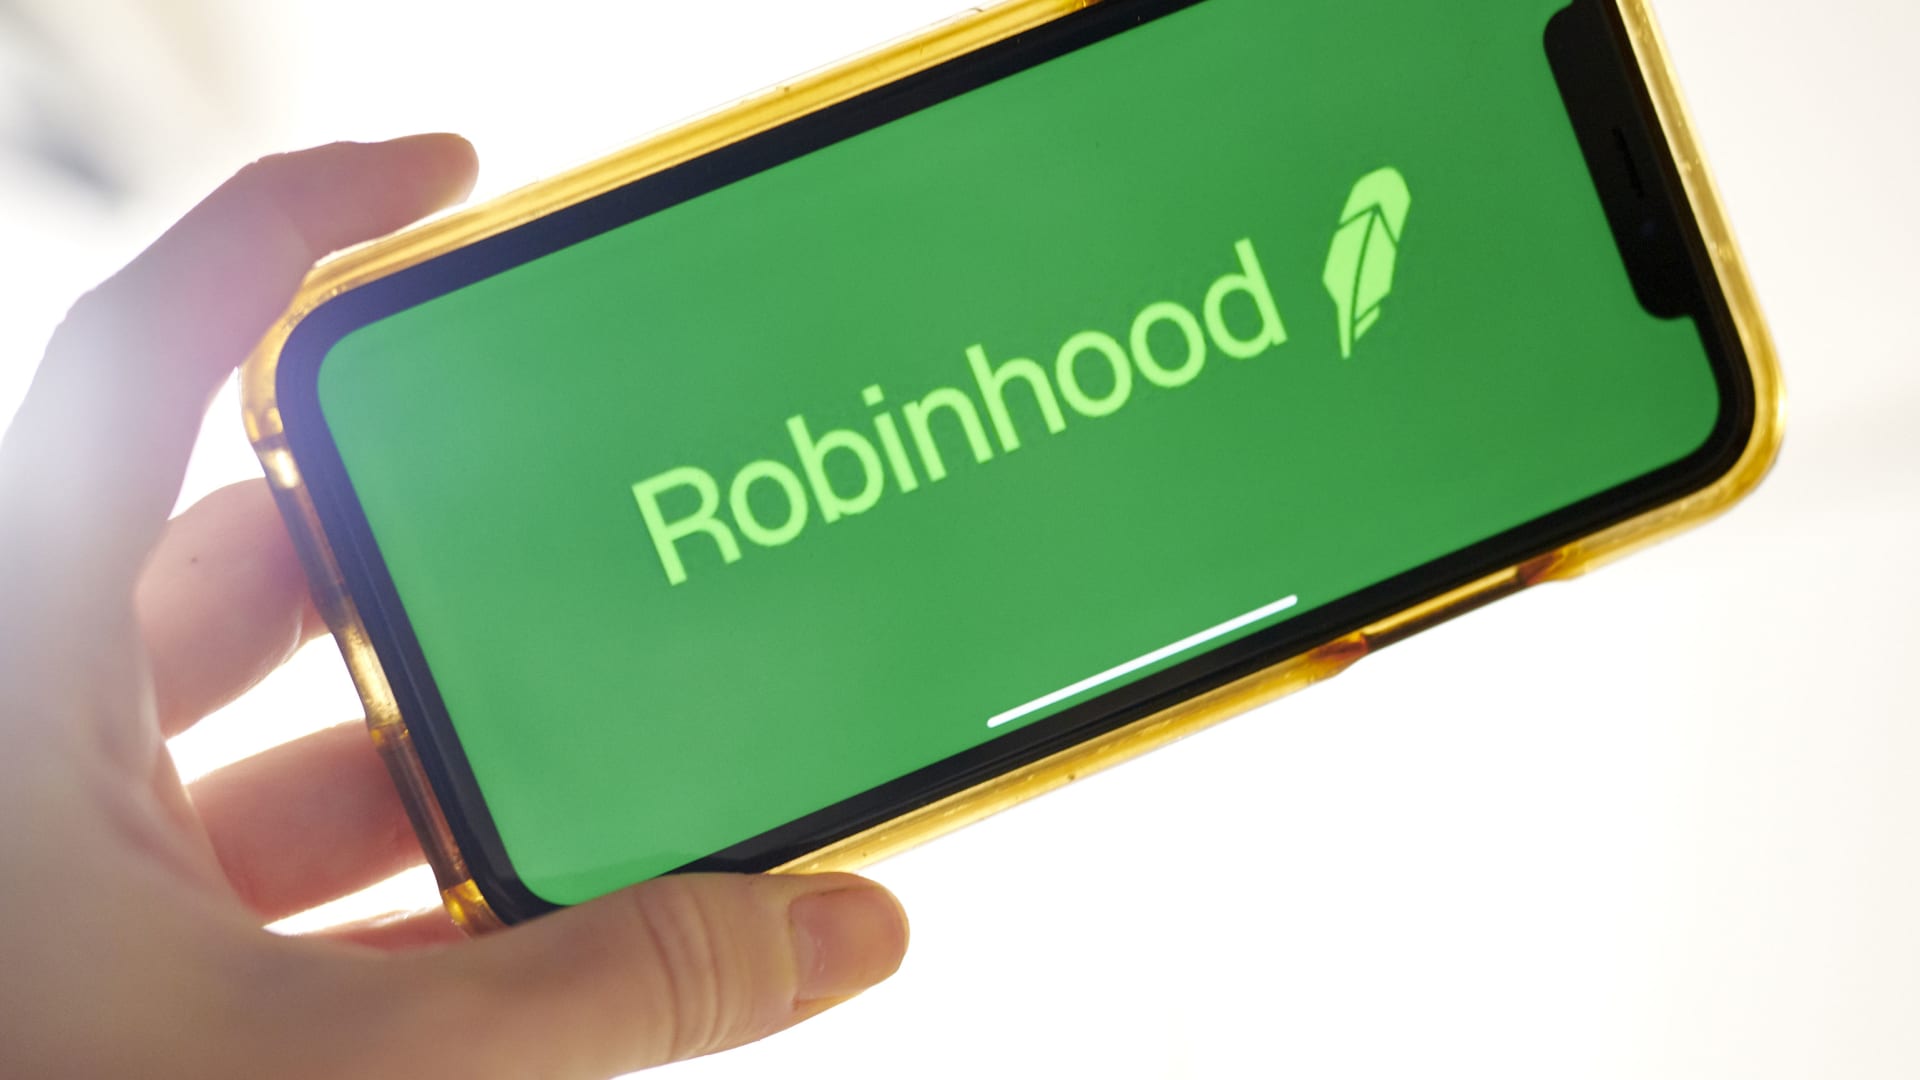 Learn and Grow with Robinhood - Robinhood Newsroom